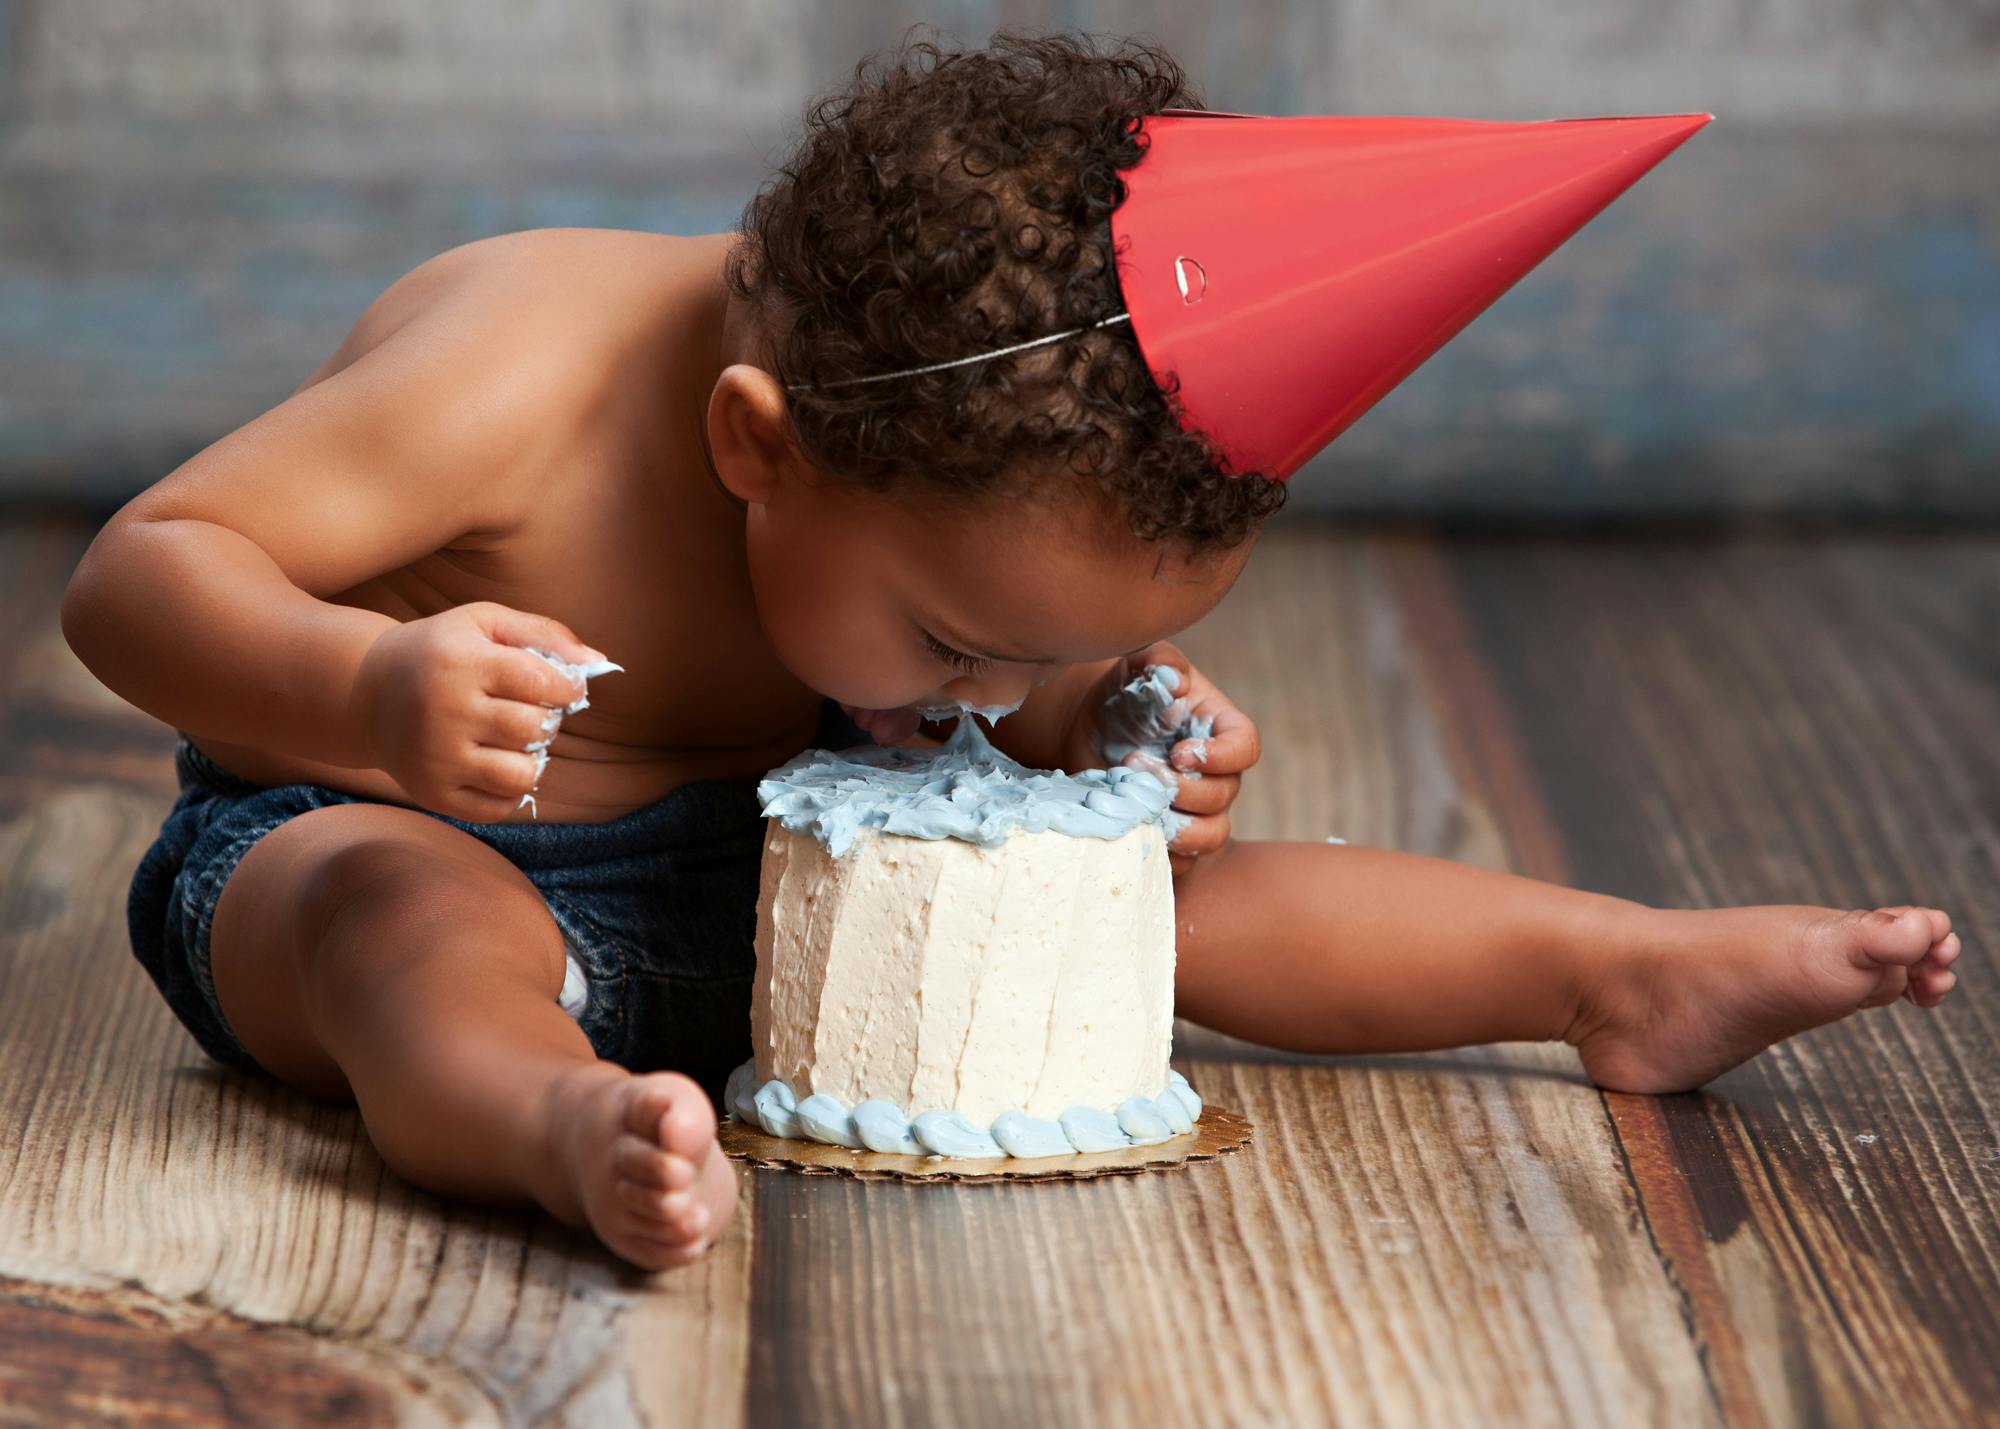 Cake smash ideas for baby's first birthday |Emmas Diary